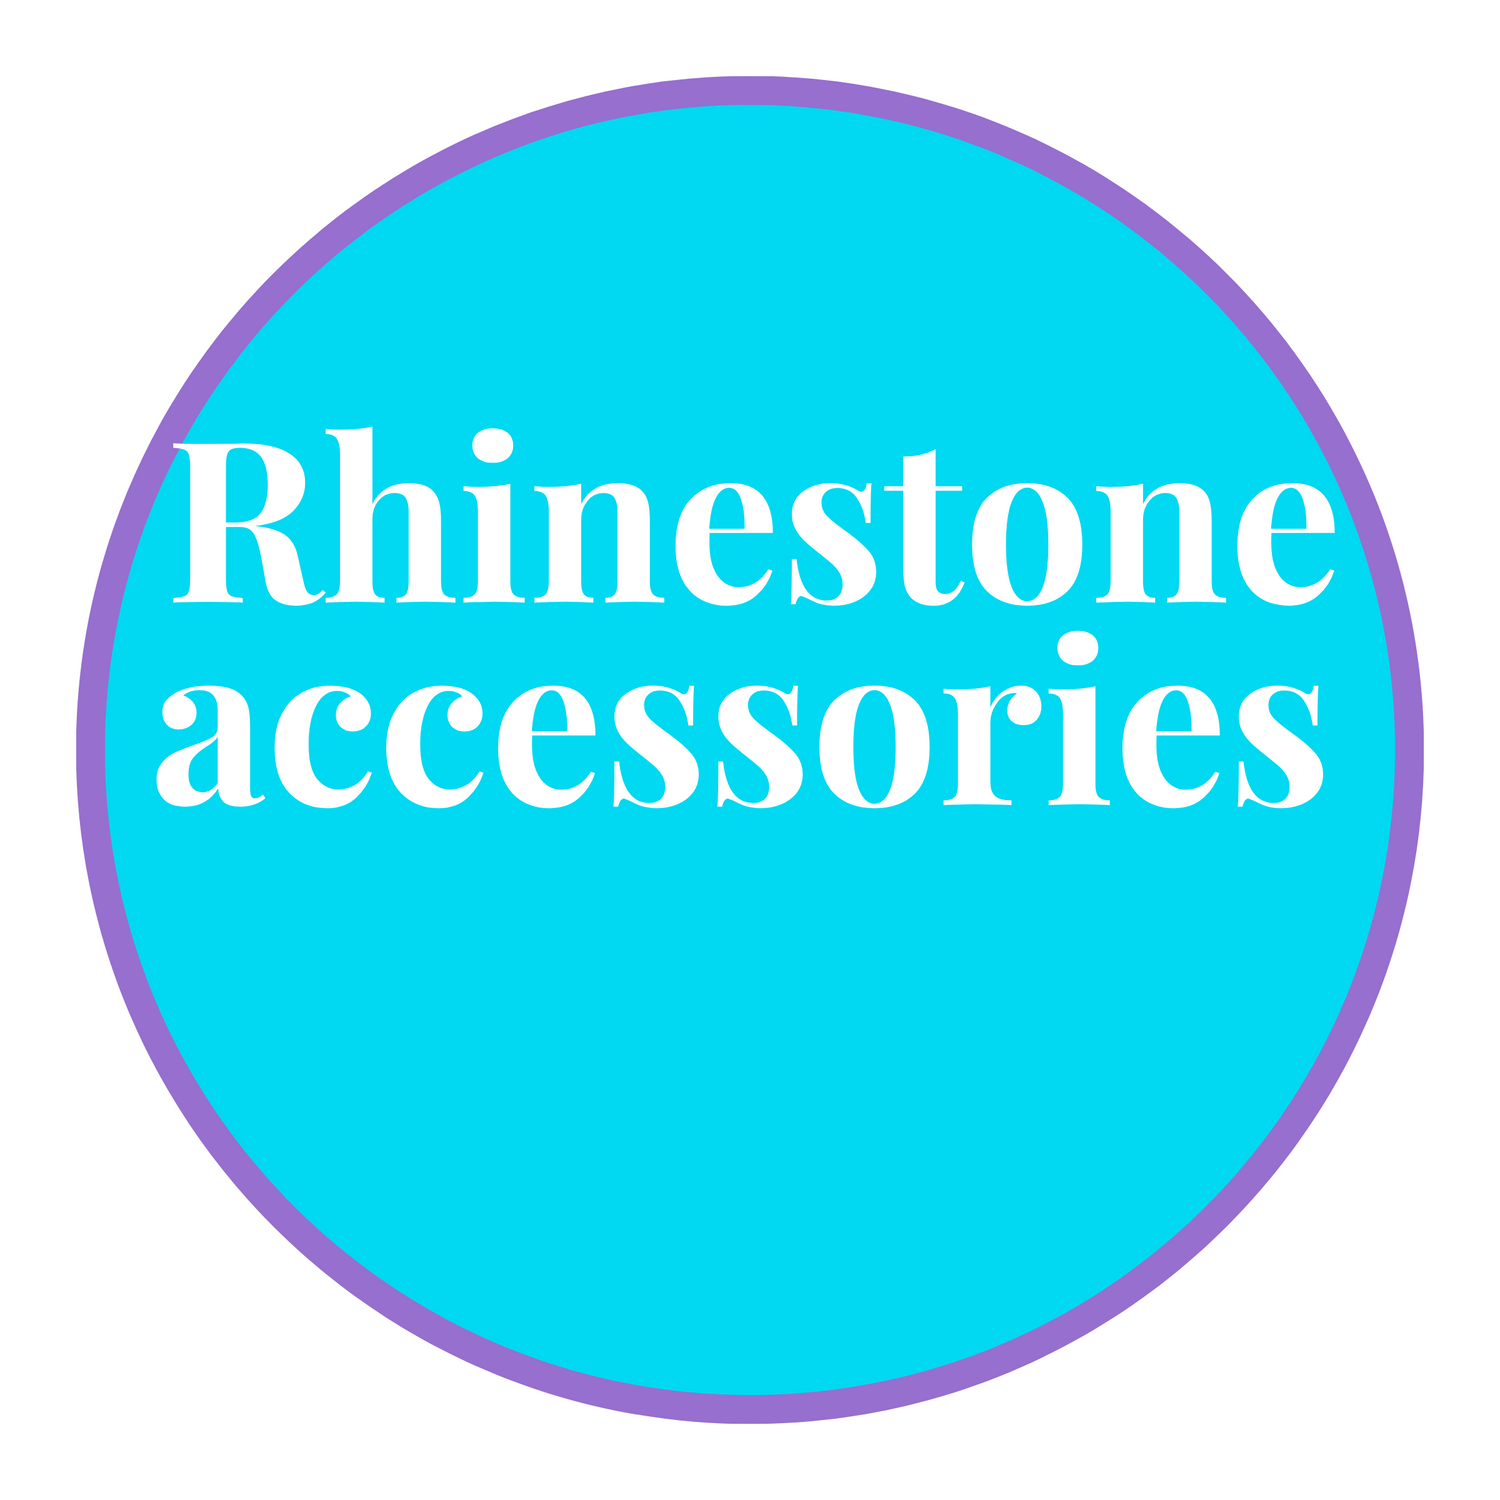 Rhinestone accessories